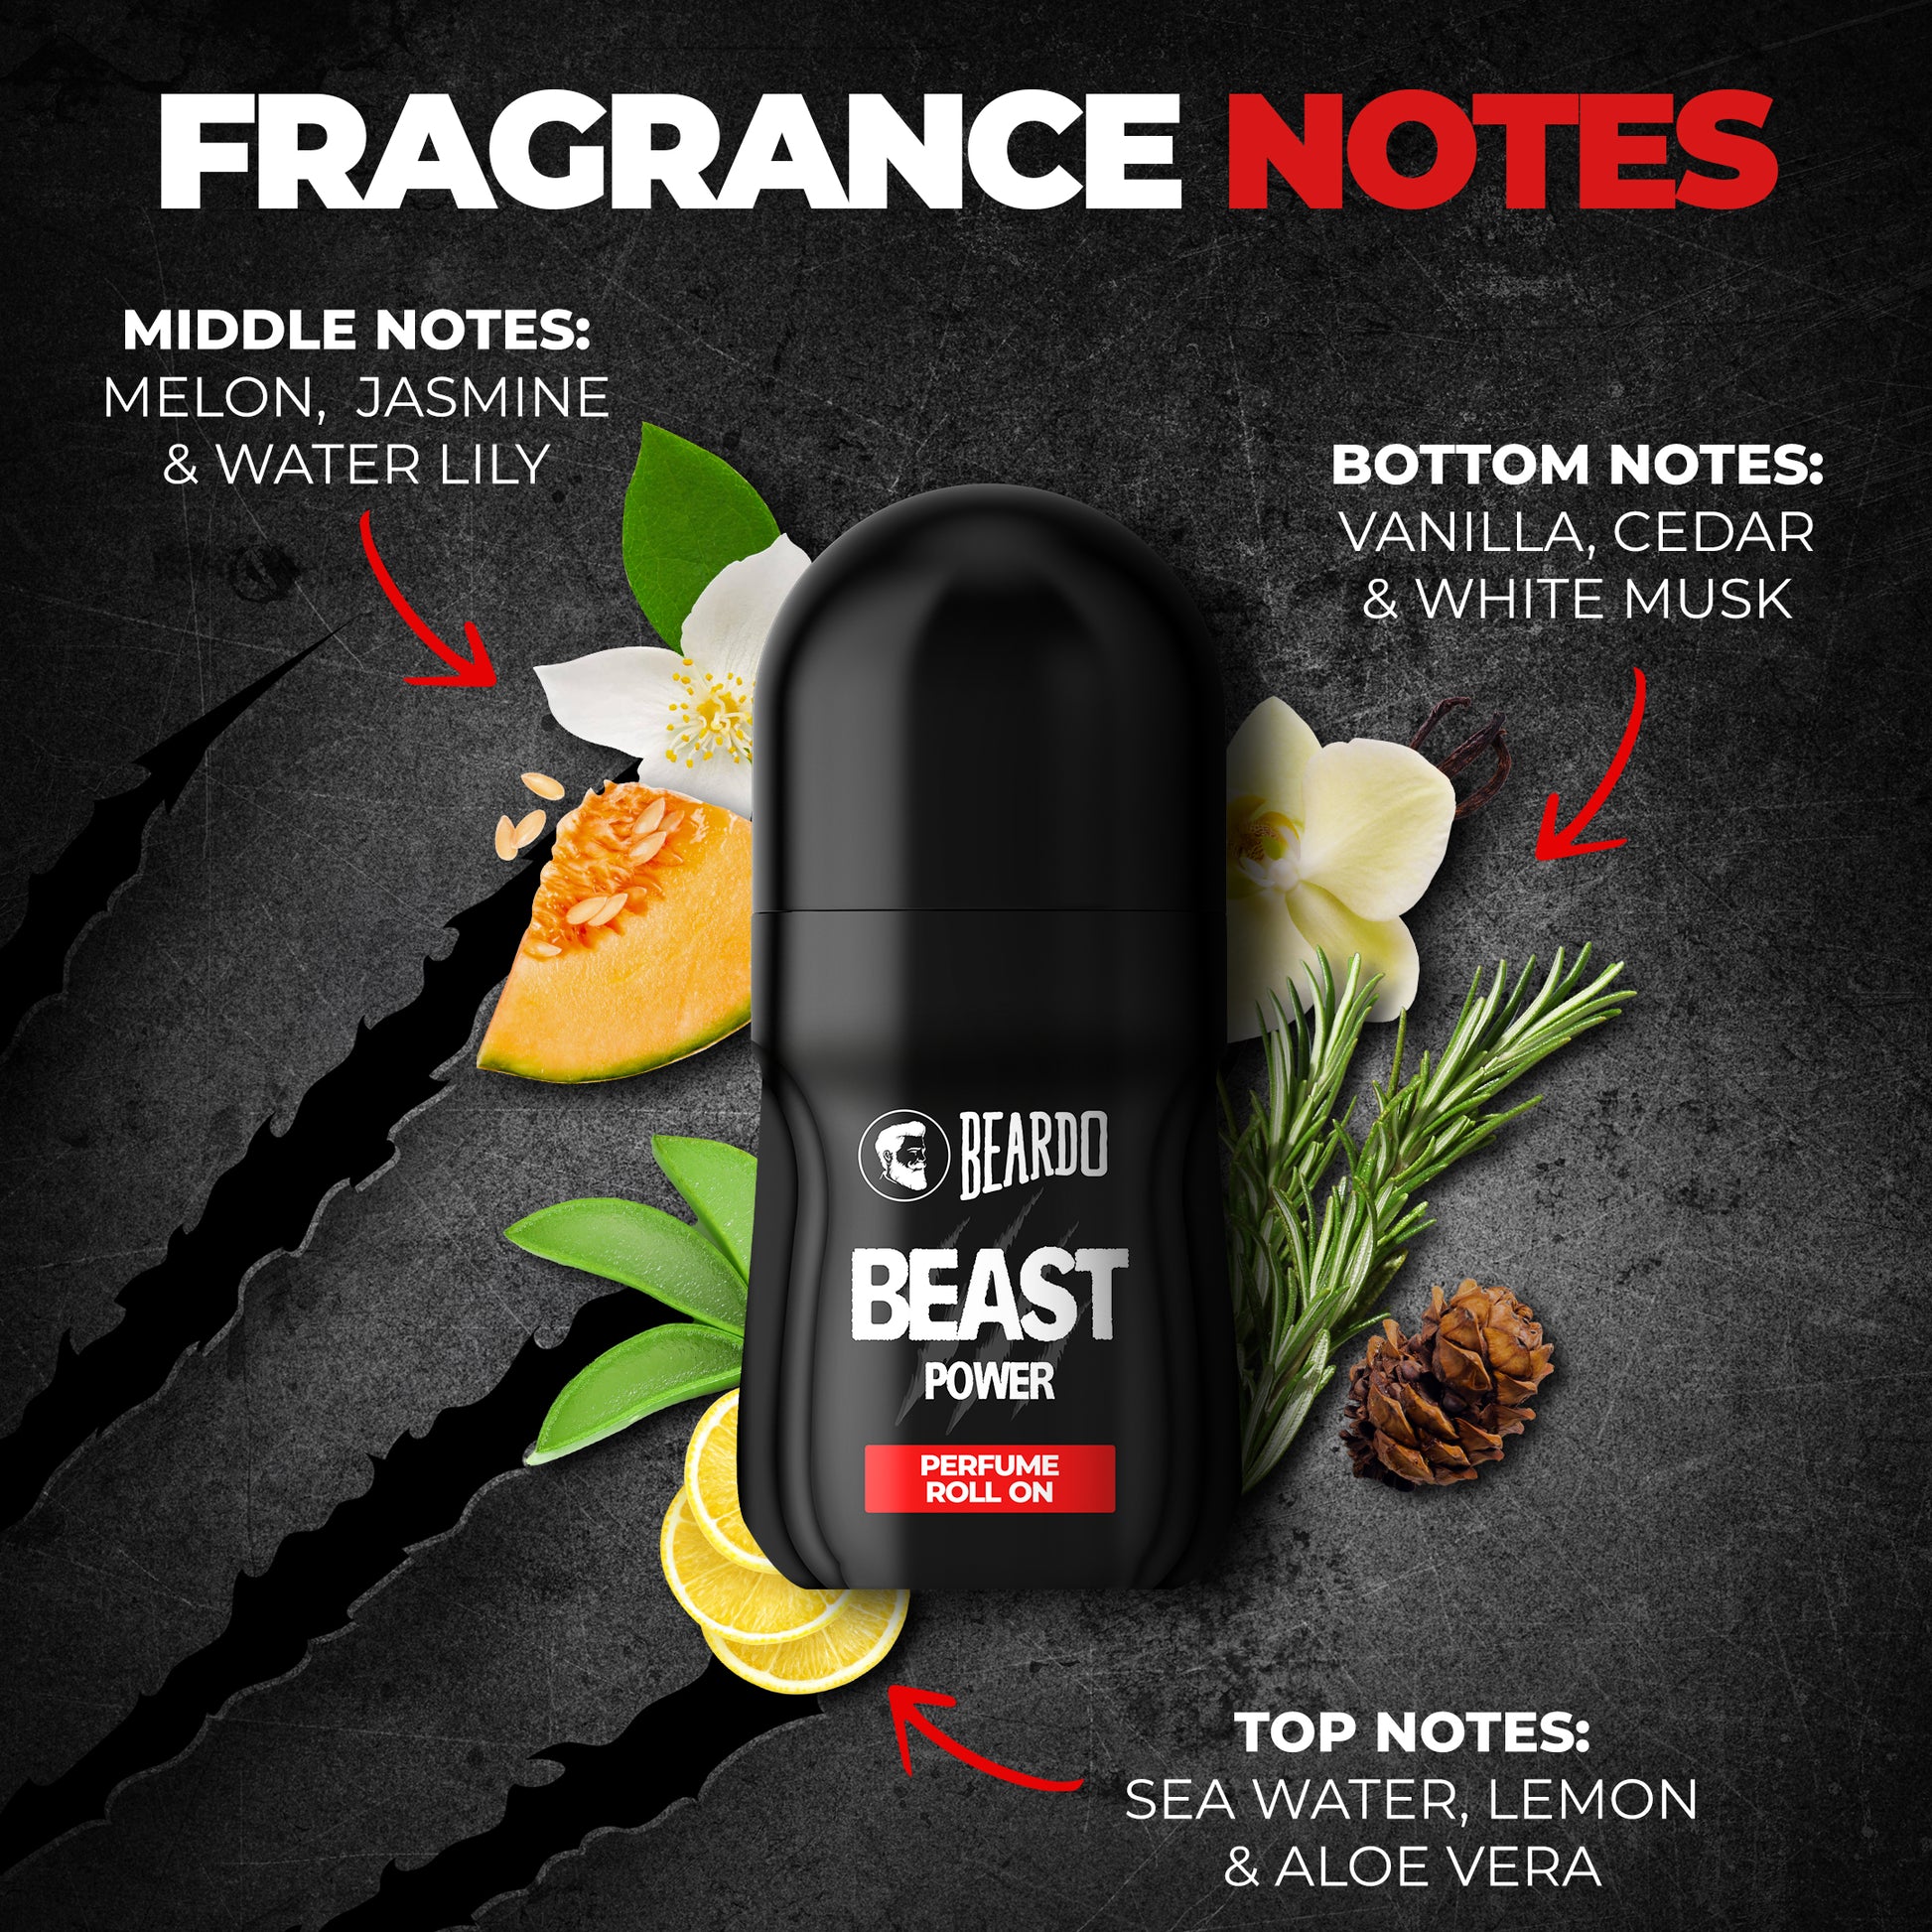 Beardo Beast Power Perfume Roll On